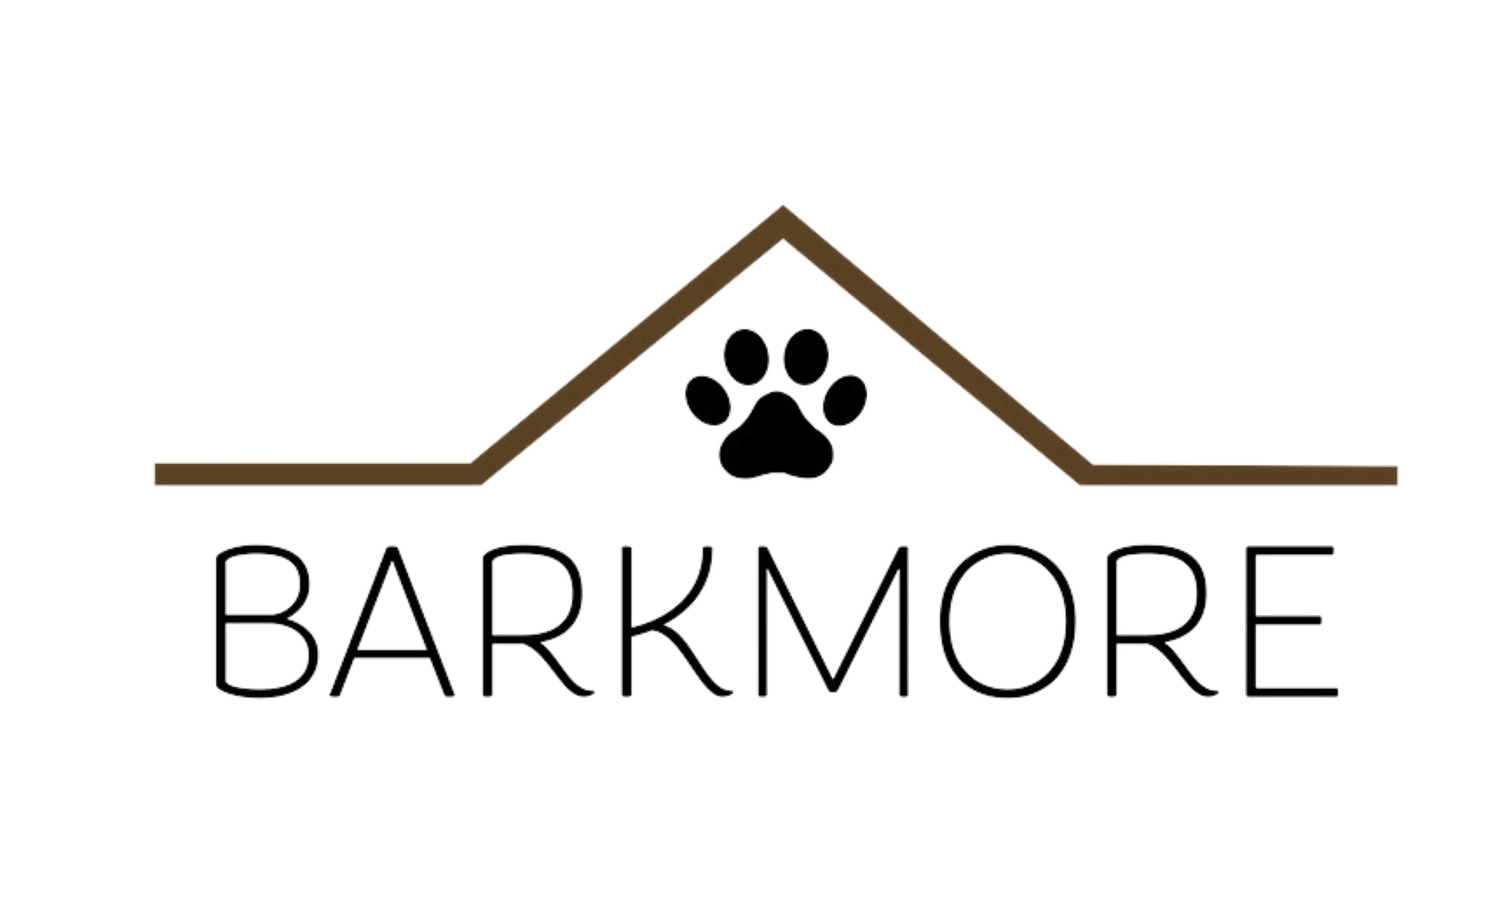 The Barkmore